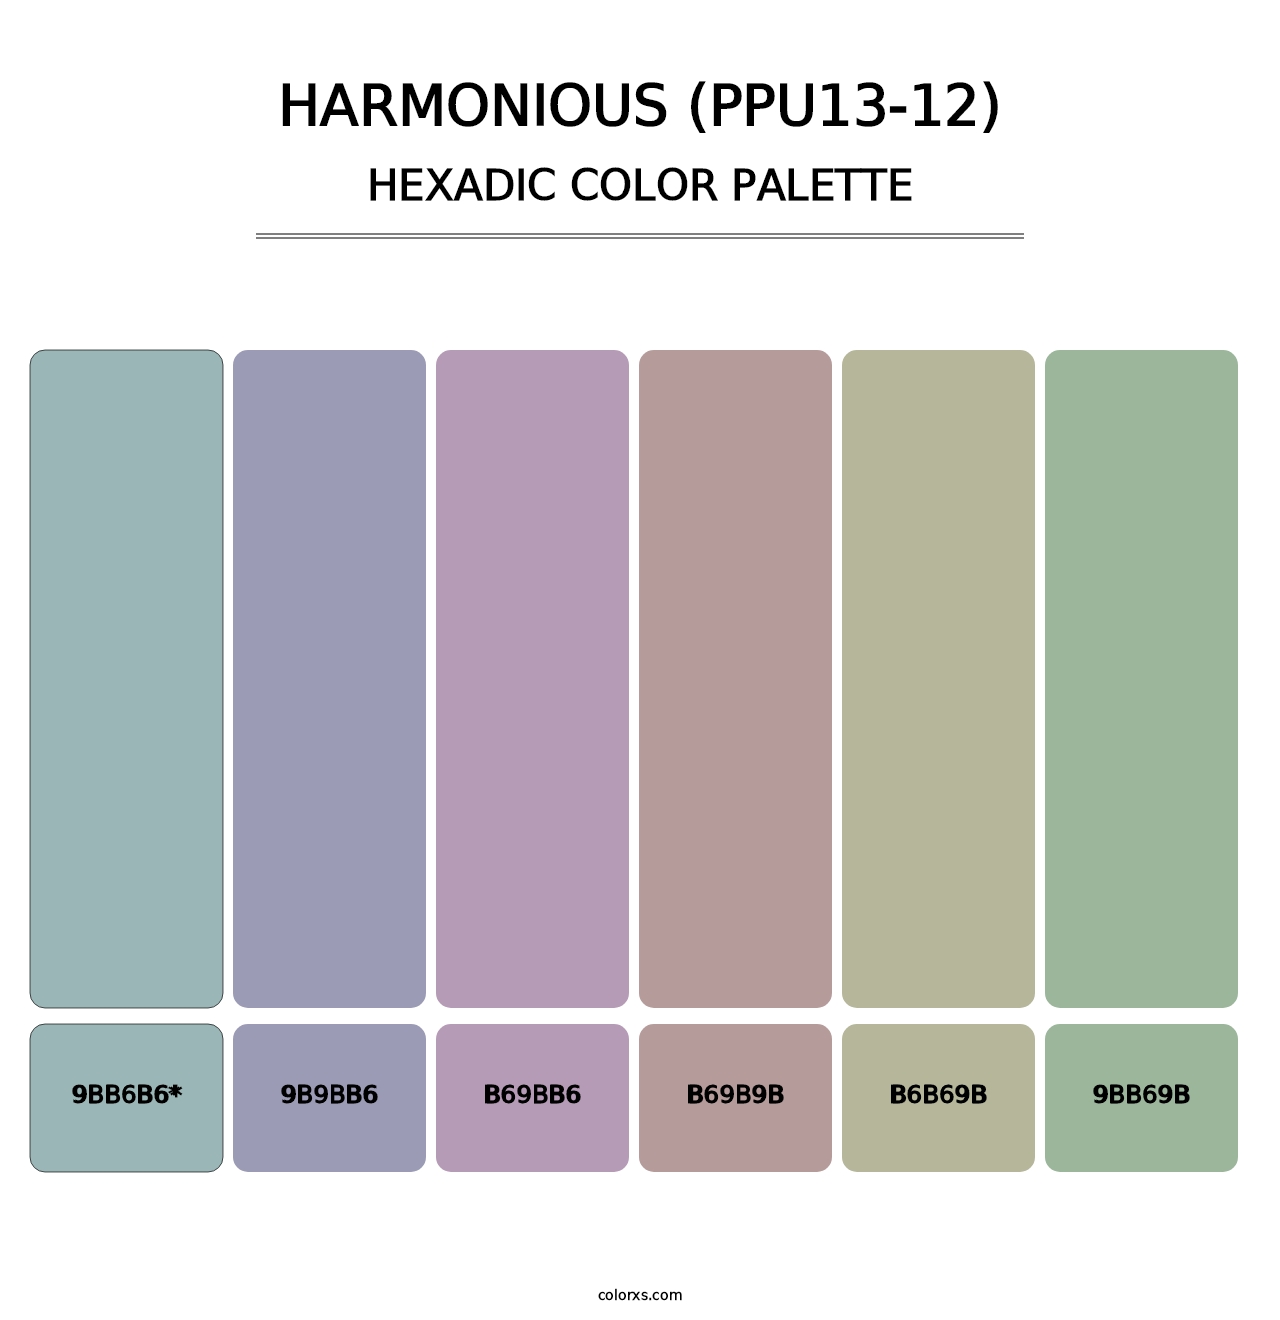 Harmonious (PPU13-12) - Hexadic Color Palette